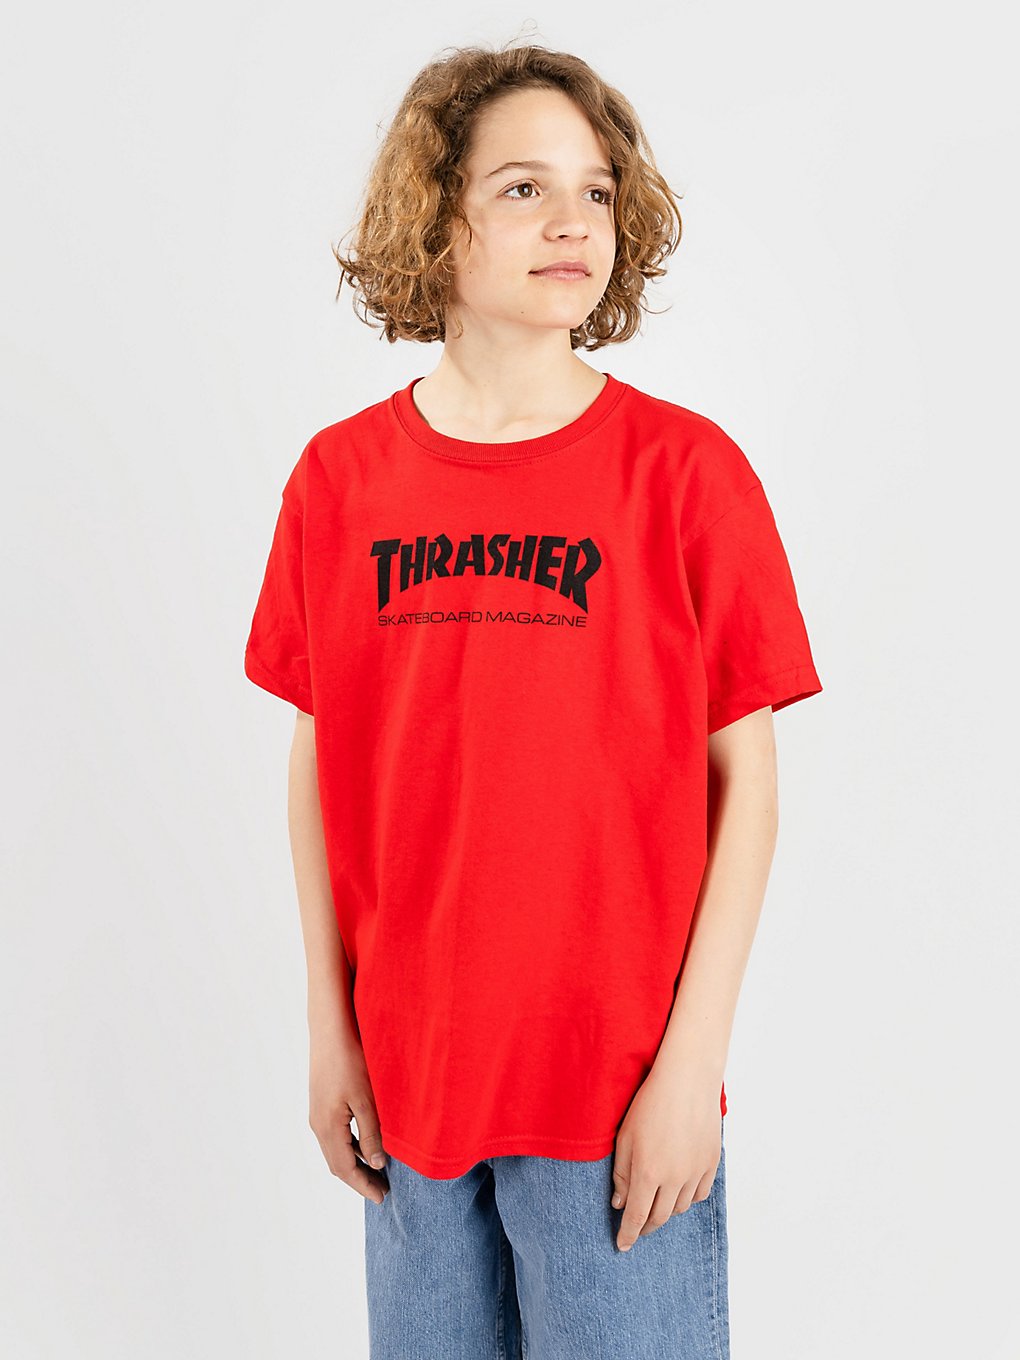 Thrasher Skate Mag Kids T-Shirt red kaufen